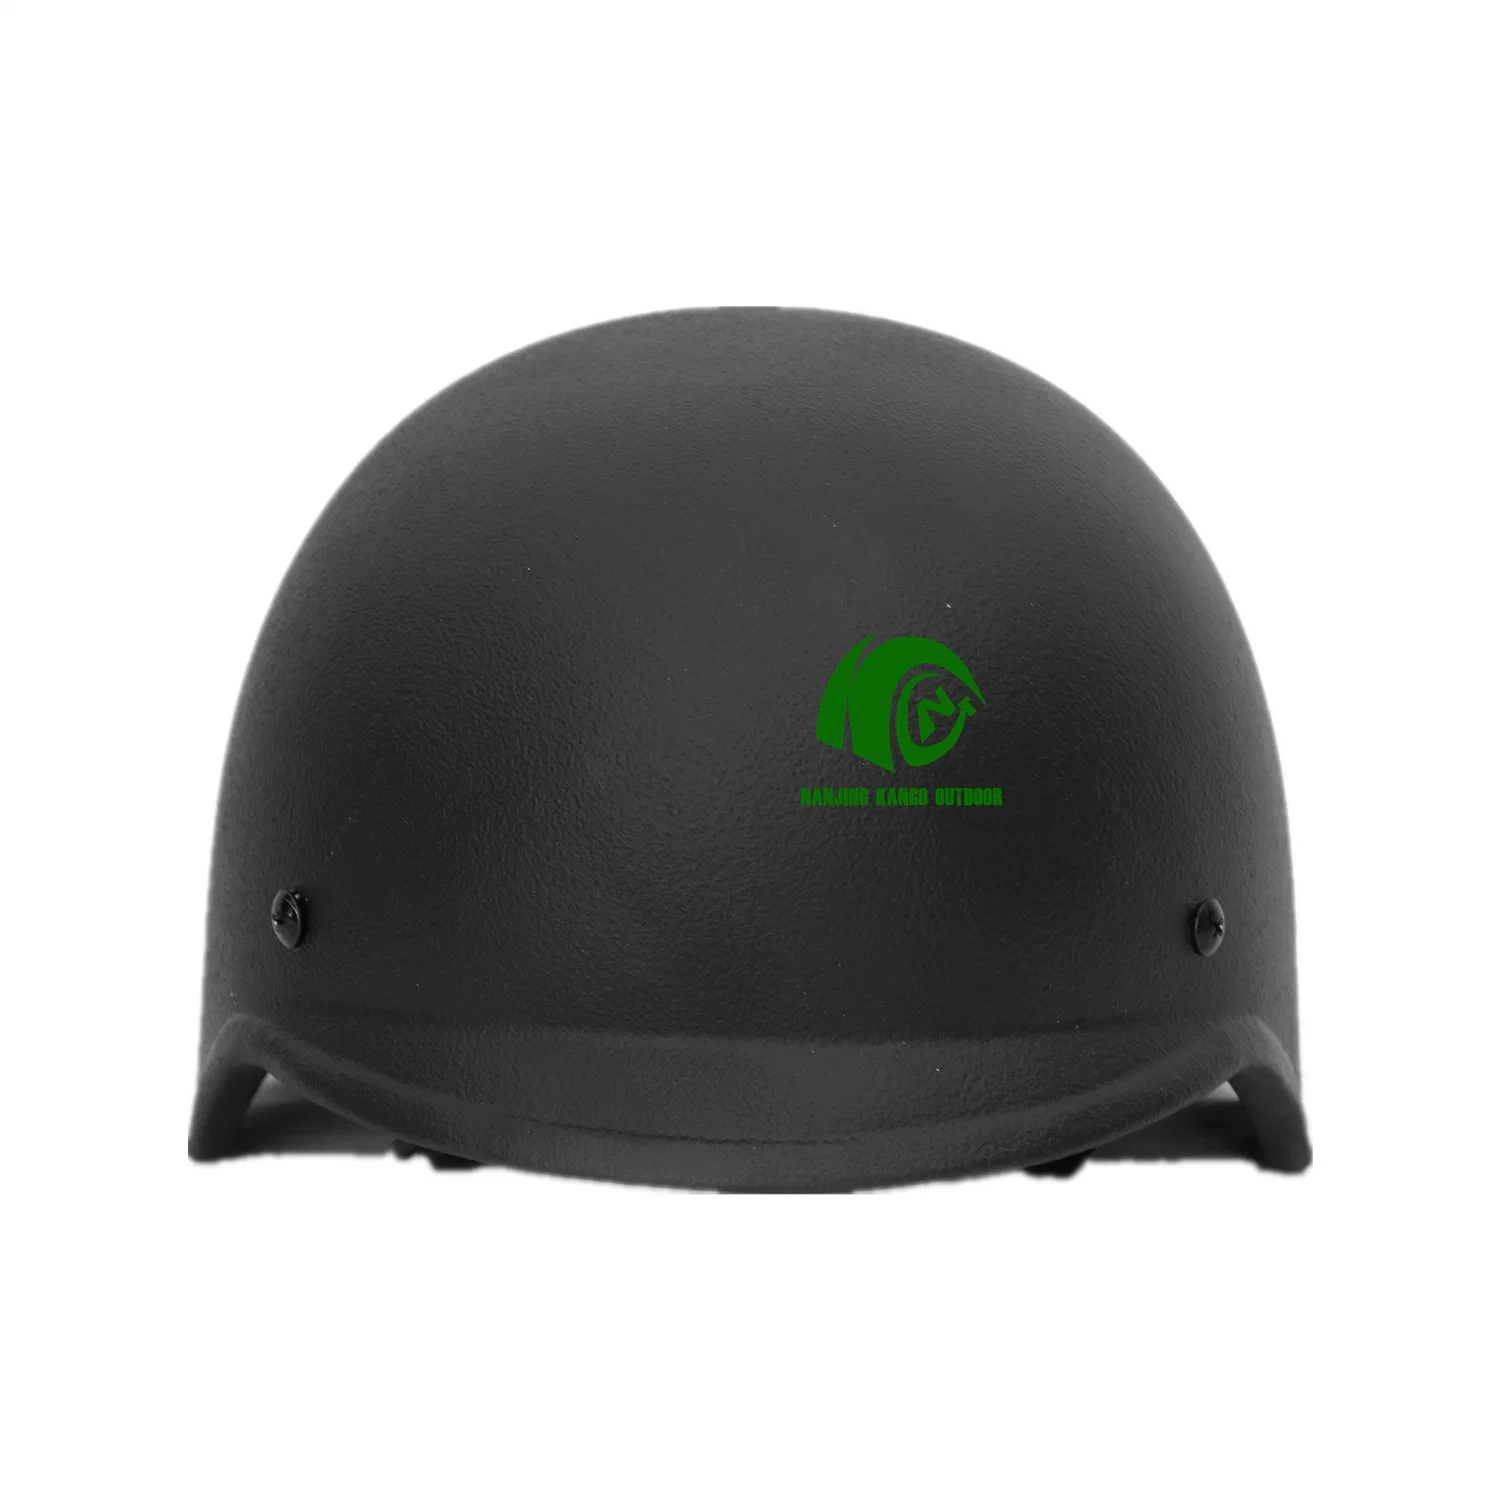 Kango Ballistic Aramid Helmet Military Tactical Bulletproof Combat Army Helmet for Police Soldier